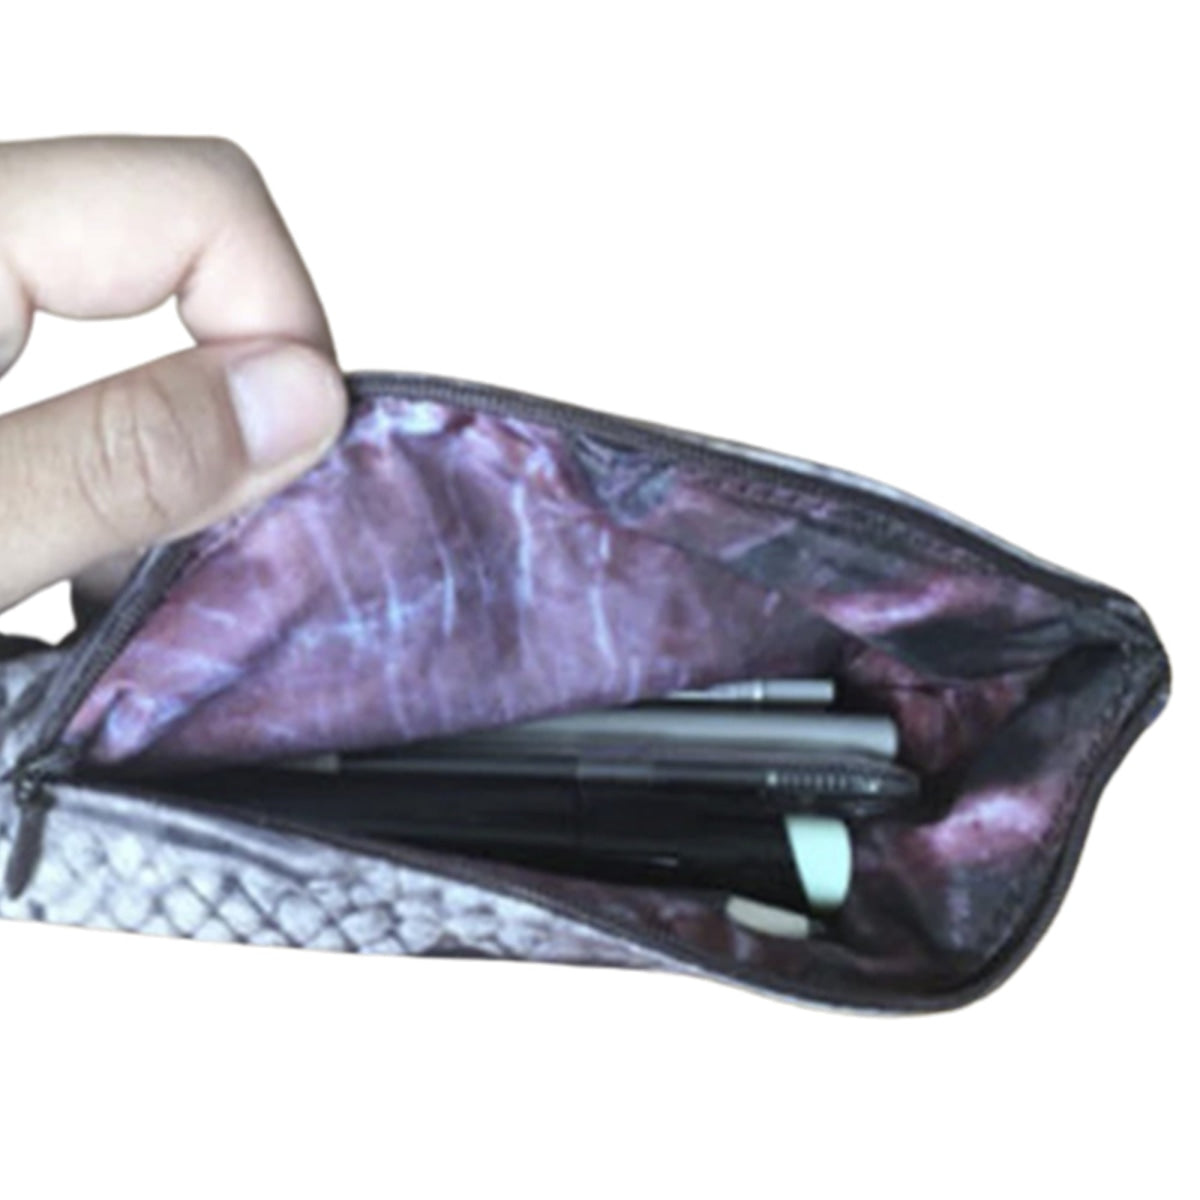 1Pcs Fish Shape Pencil Case Pen Bag Realistic Make-Up Pouch With Zipper Zip Craft Toy Crafts